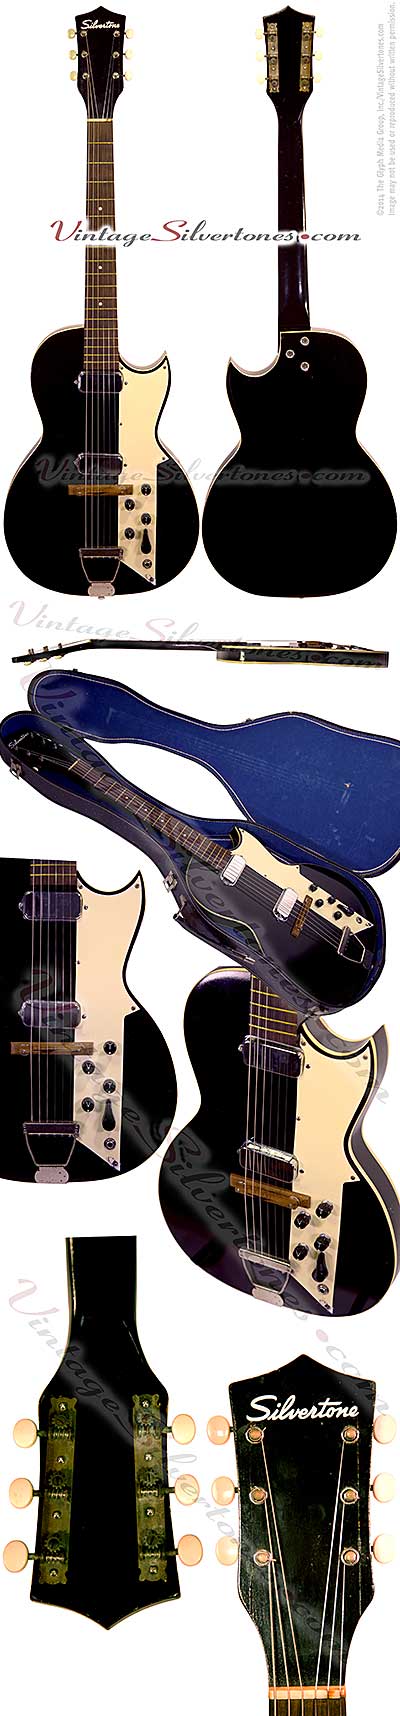 Silvertone kay 1460 Value Leader electric guitar, 2 pu 1960